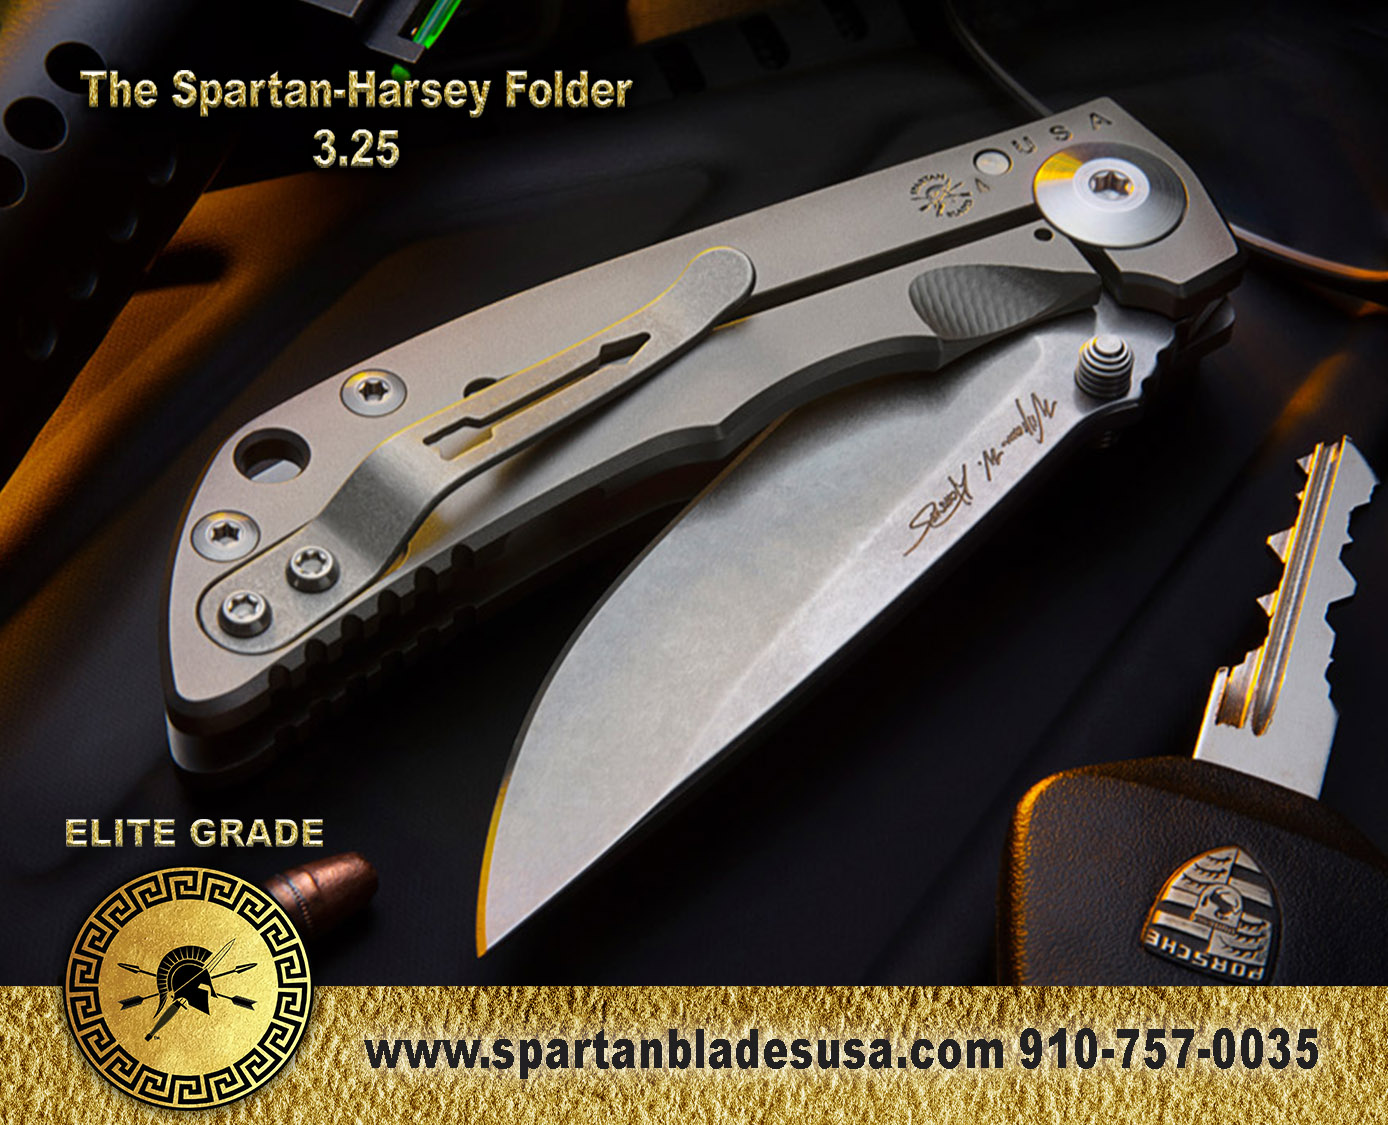 The Spartan-Harsey Foldert 3.25